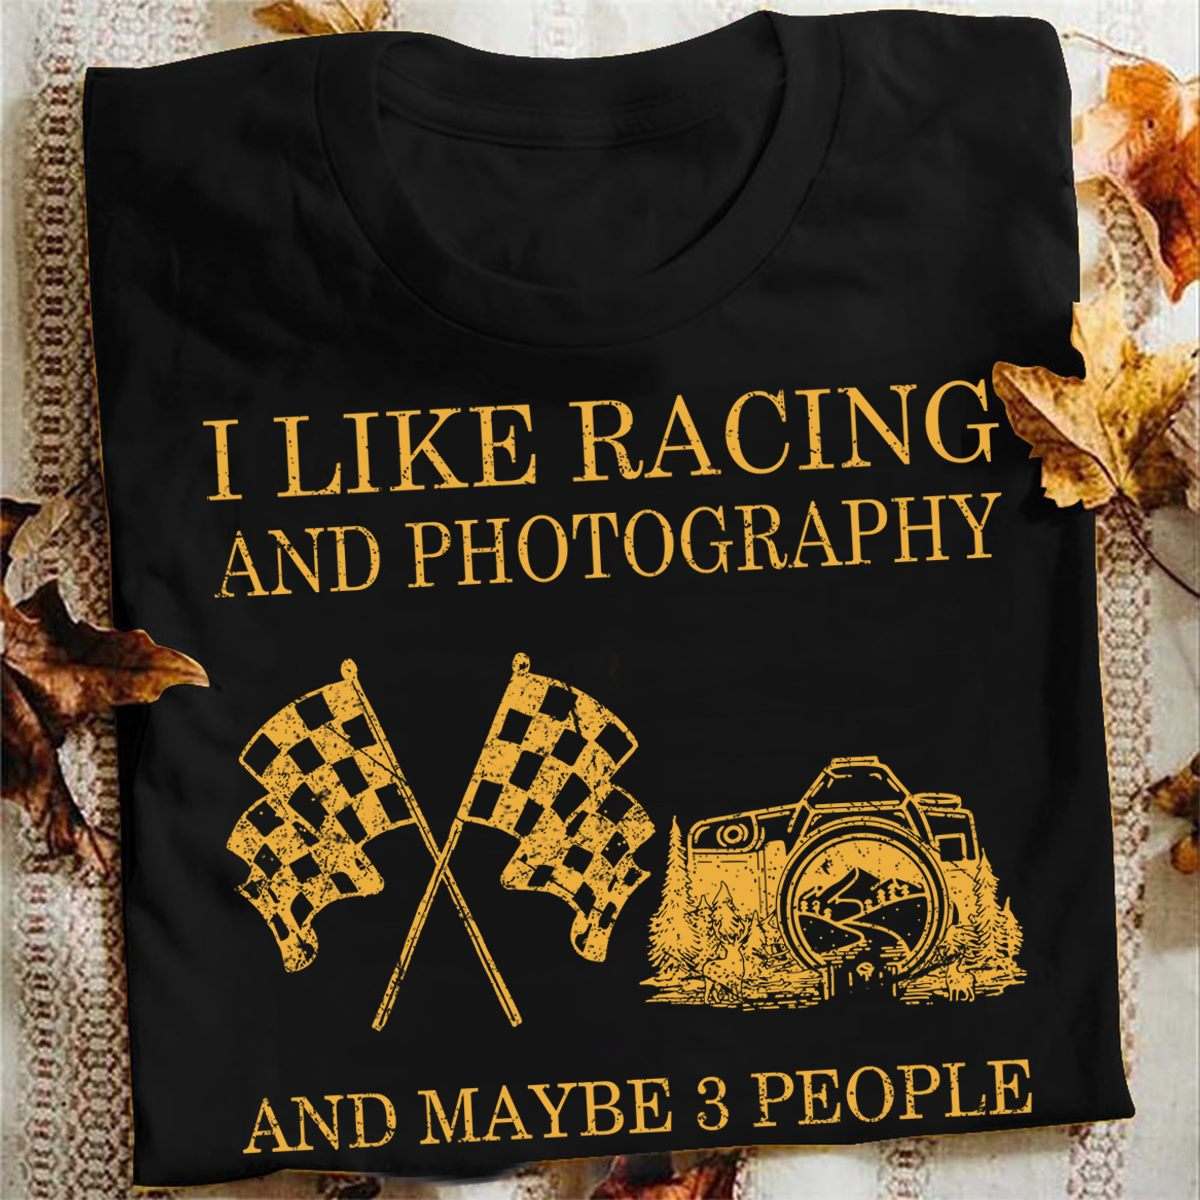 Racing Photography - I like racing and photography and maybe 3 people